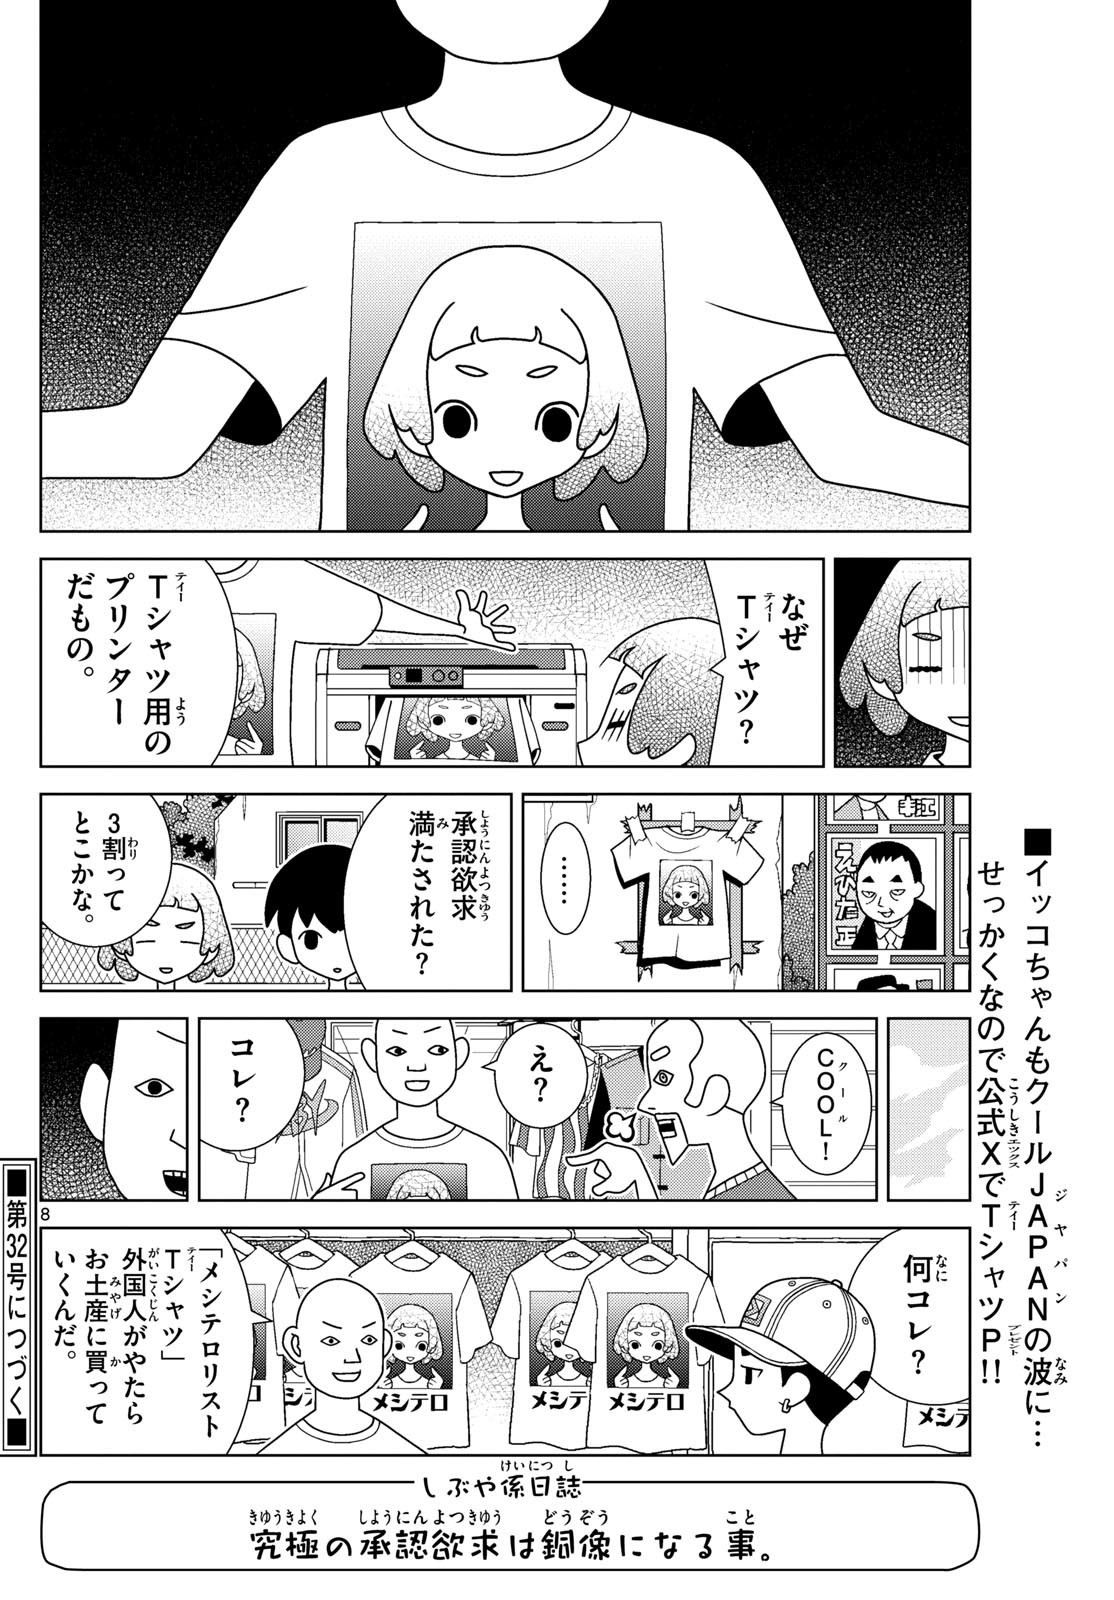 Shibuya Near Family - Chapter 099 - Page 8